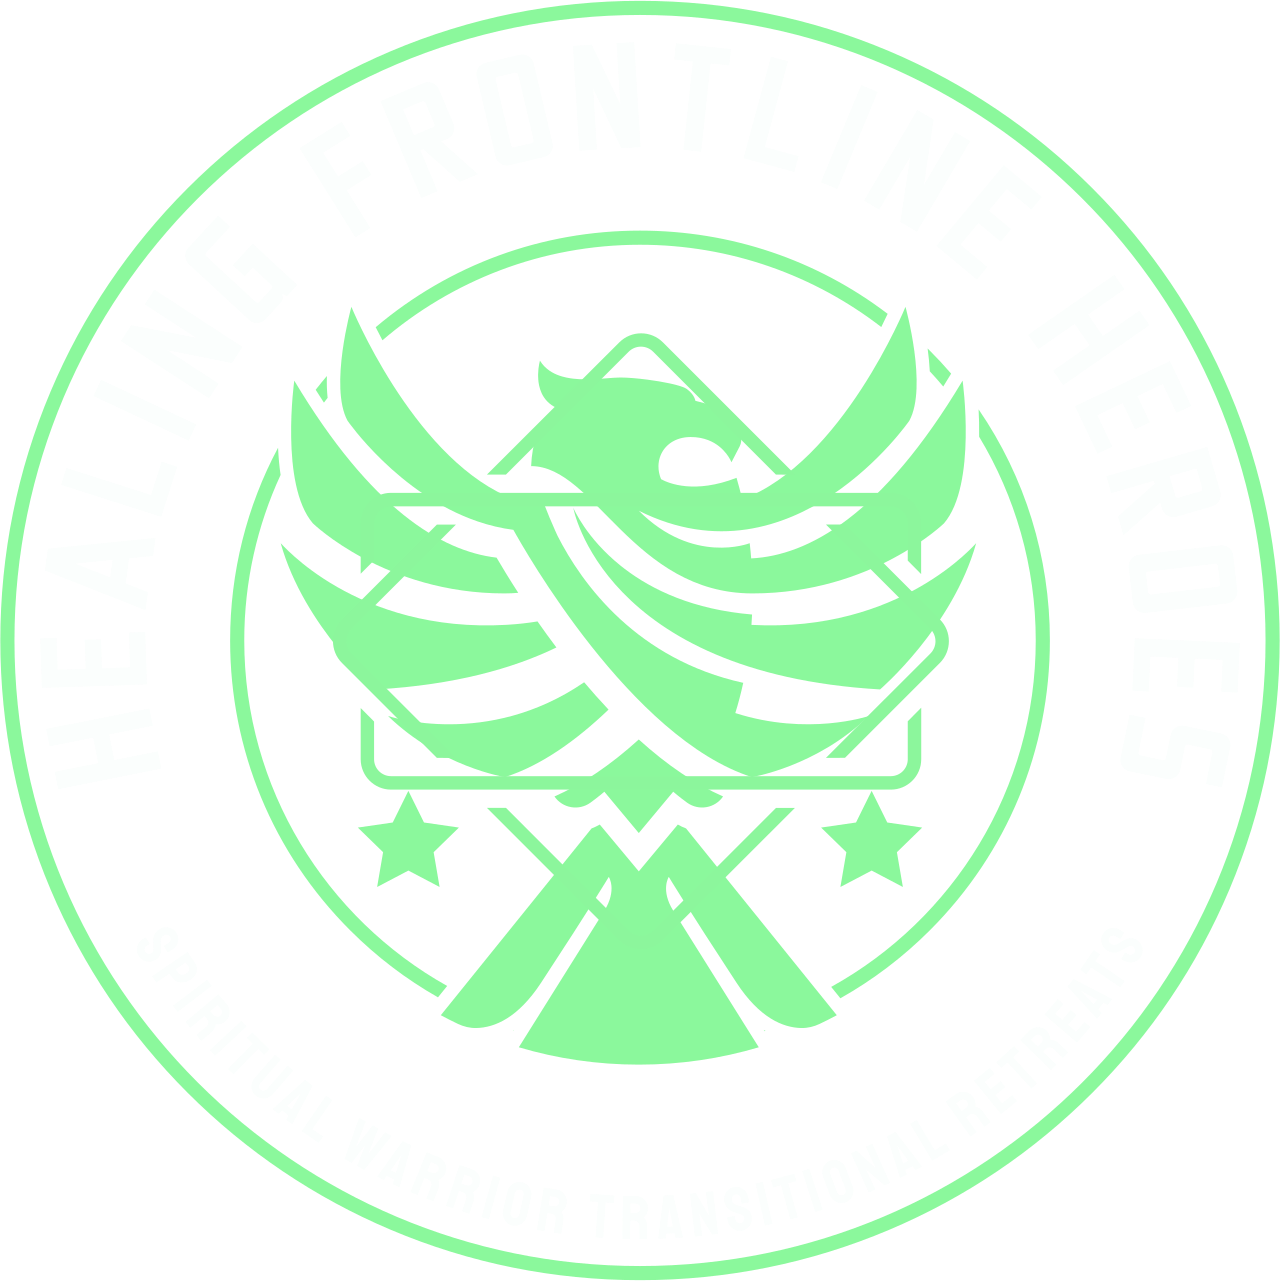 Healing Frontline Heroes's web page